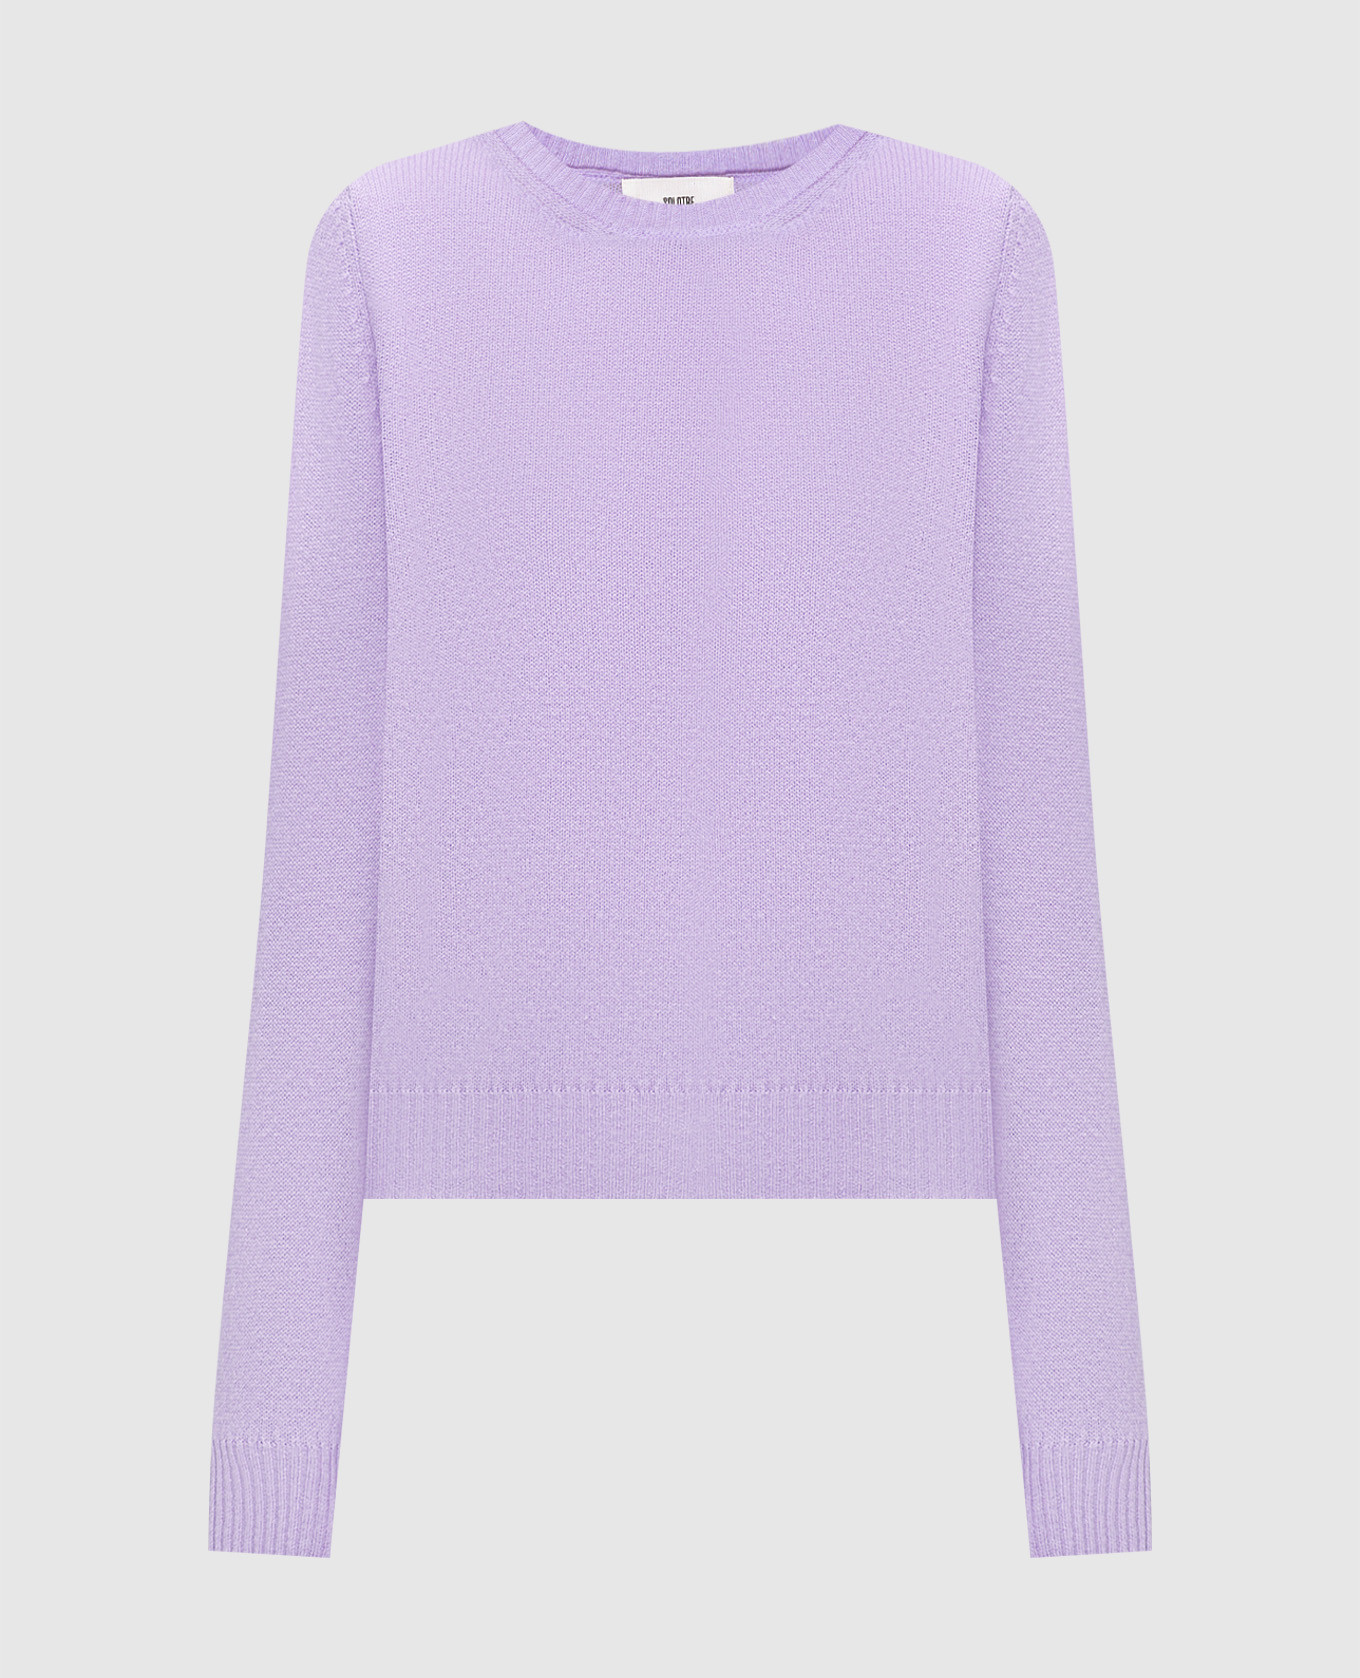 Purple cashmere jumper